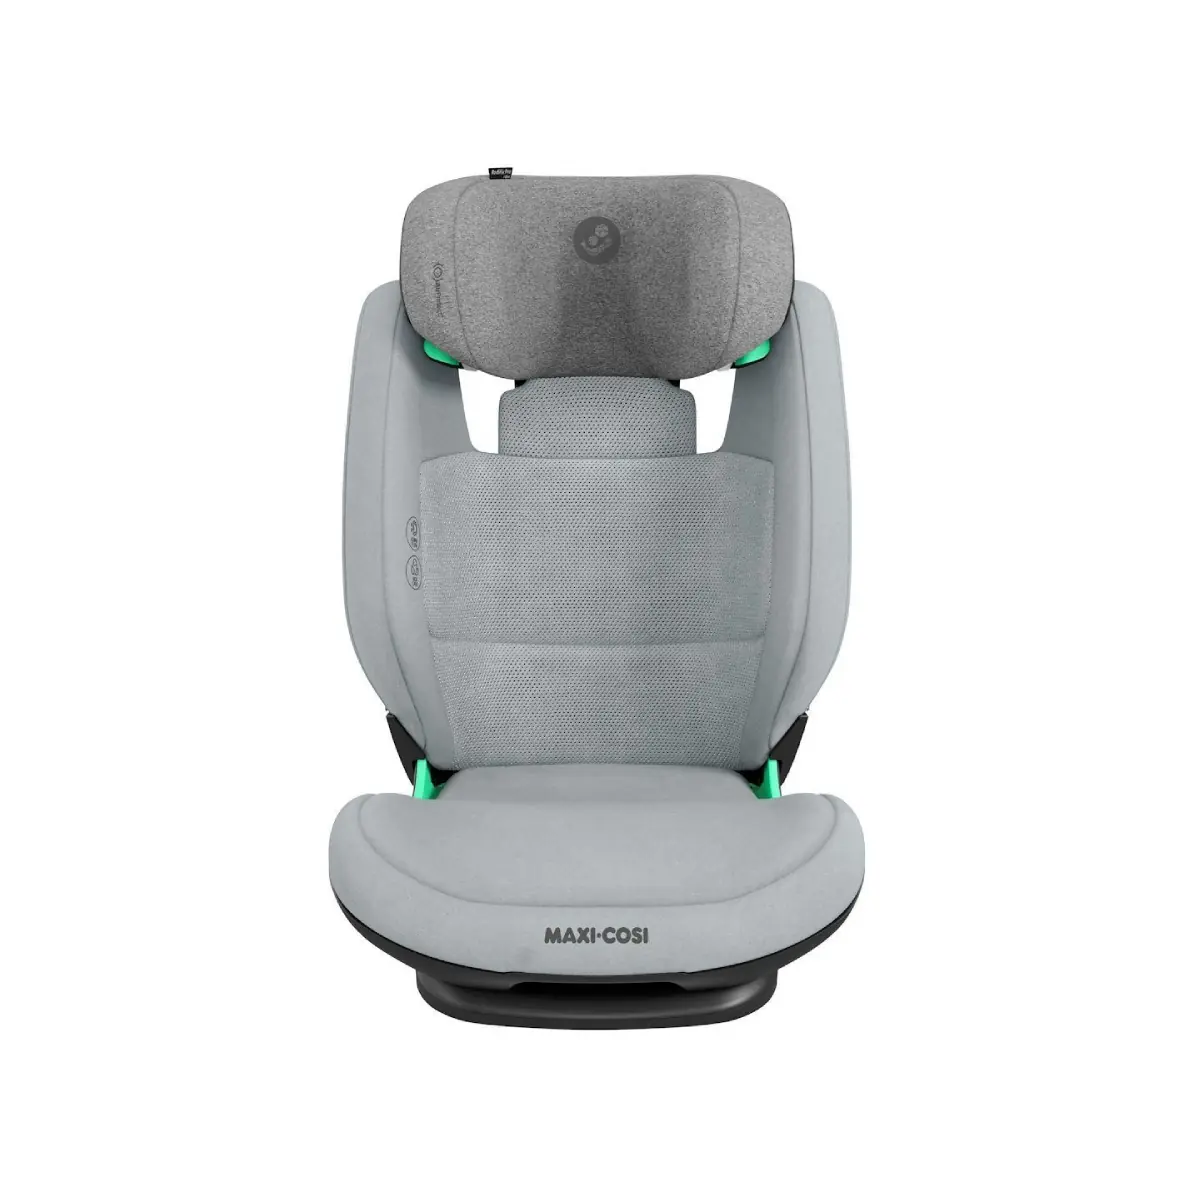 Maxi-Cosi Rodifix AirProtect Group 2/3 Car Seat